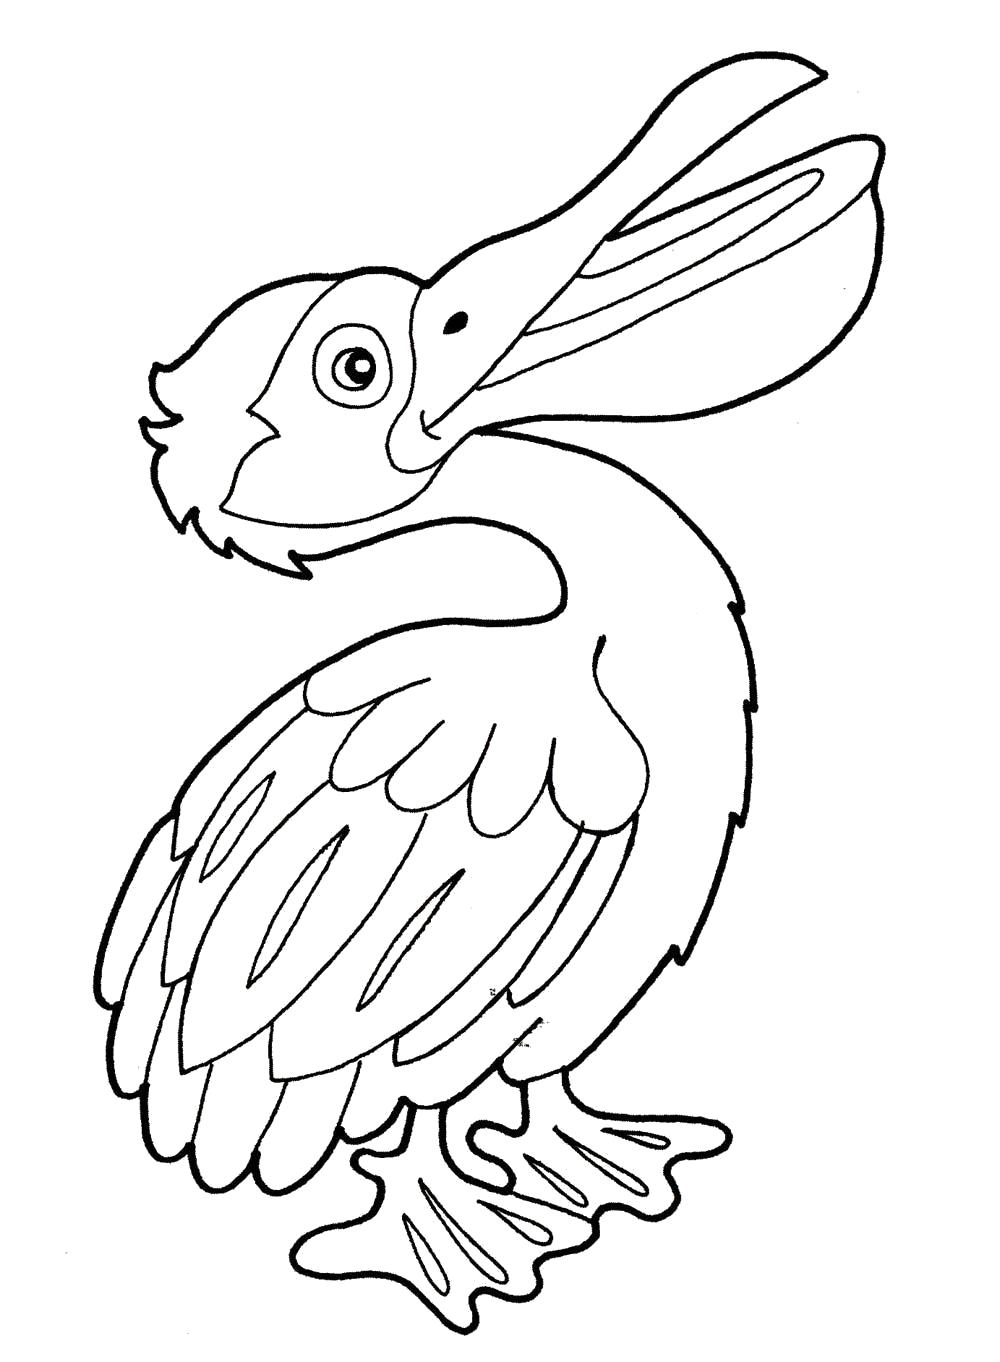 Название: Раскраска Раскраска пеликан. Категория: Пеликан. Теги: Пеликан.